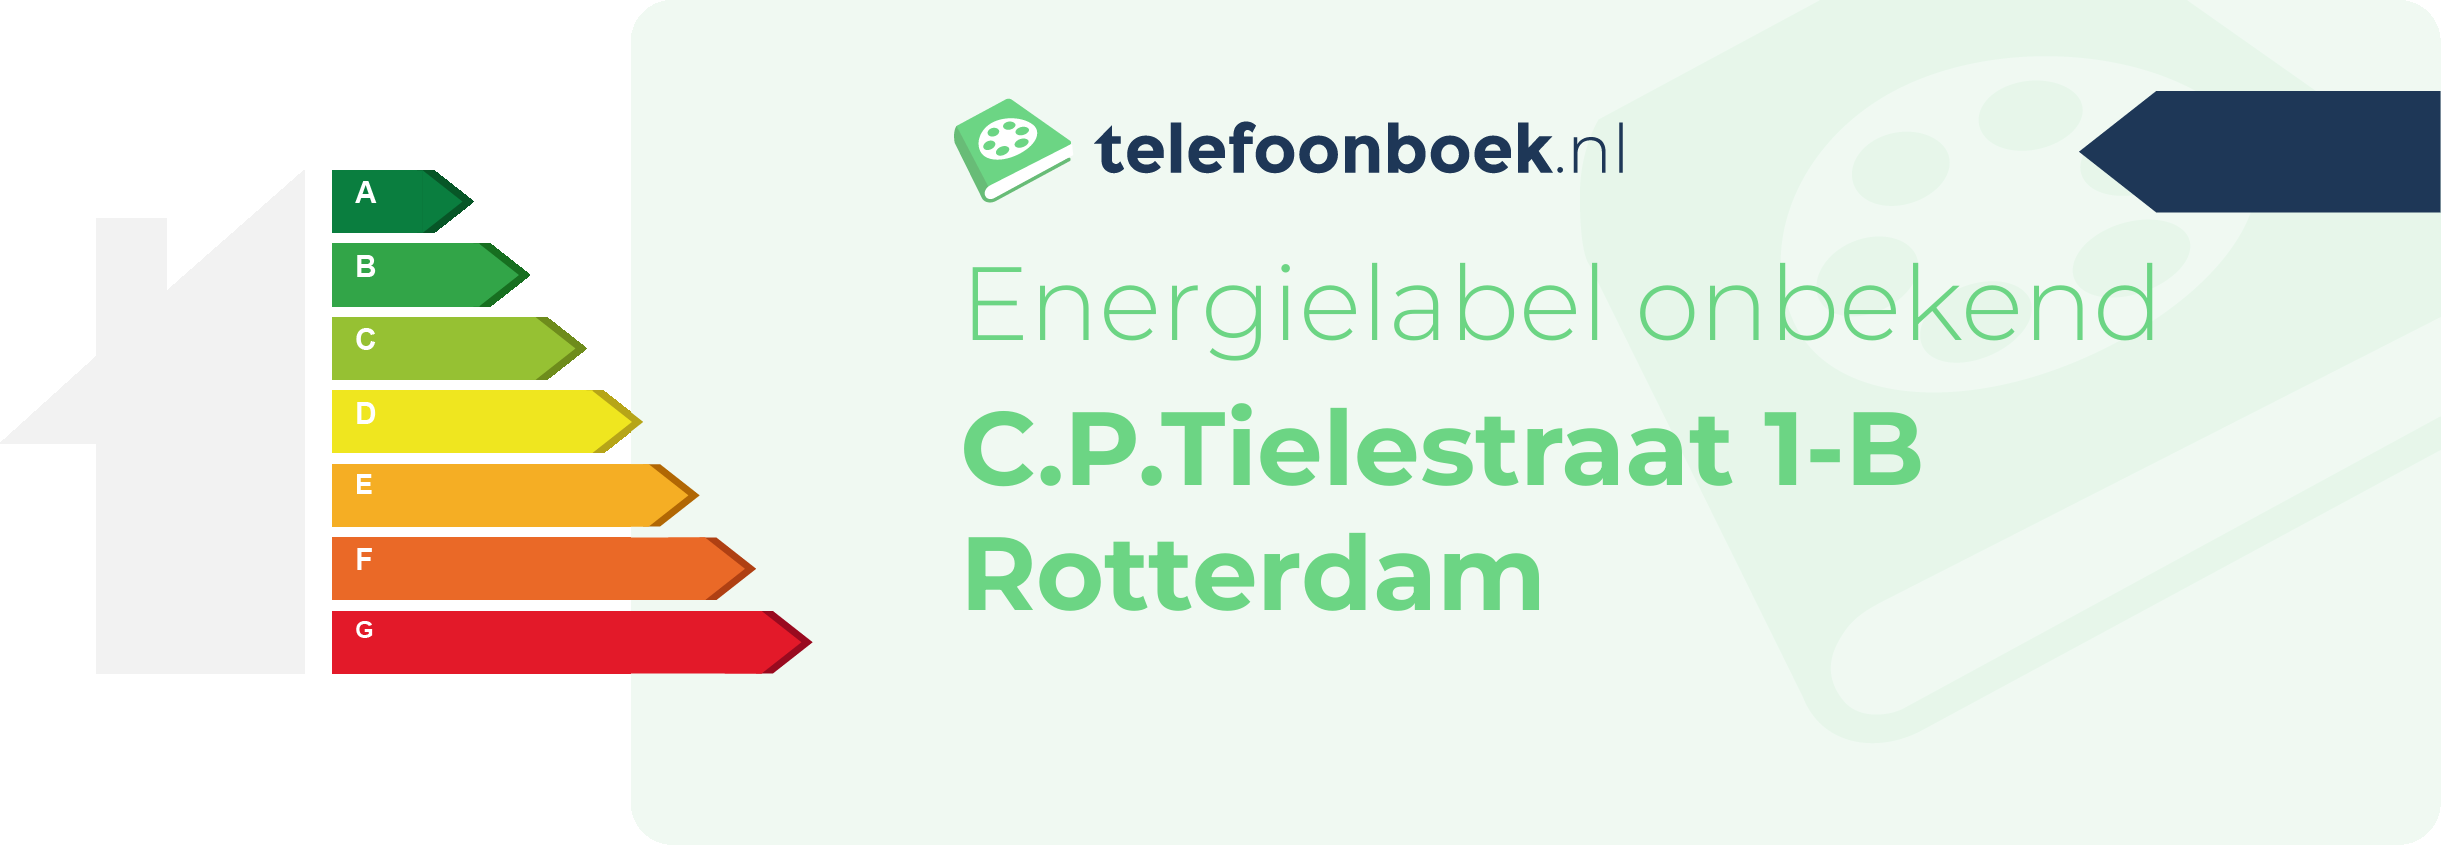 Energielabel C.P.Tielestraat 1-B Rotterdam